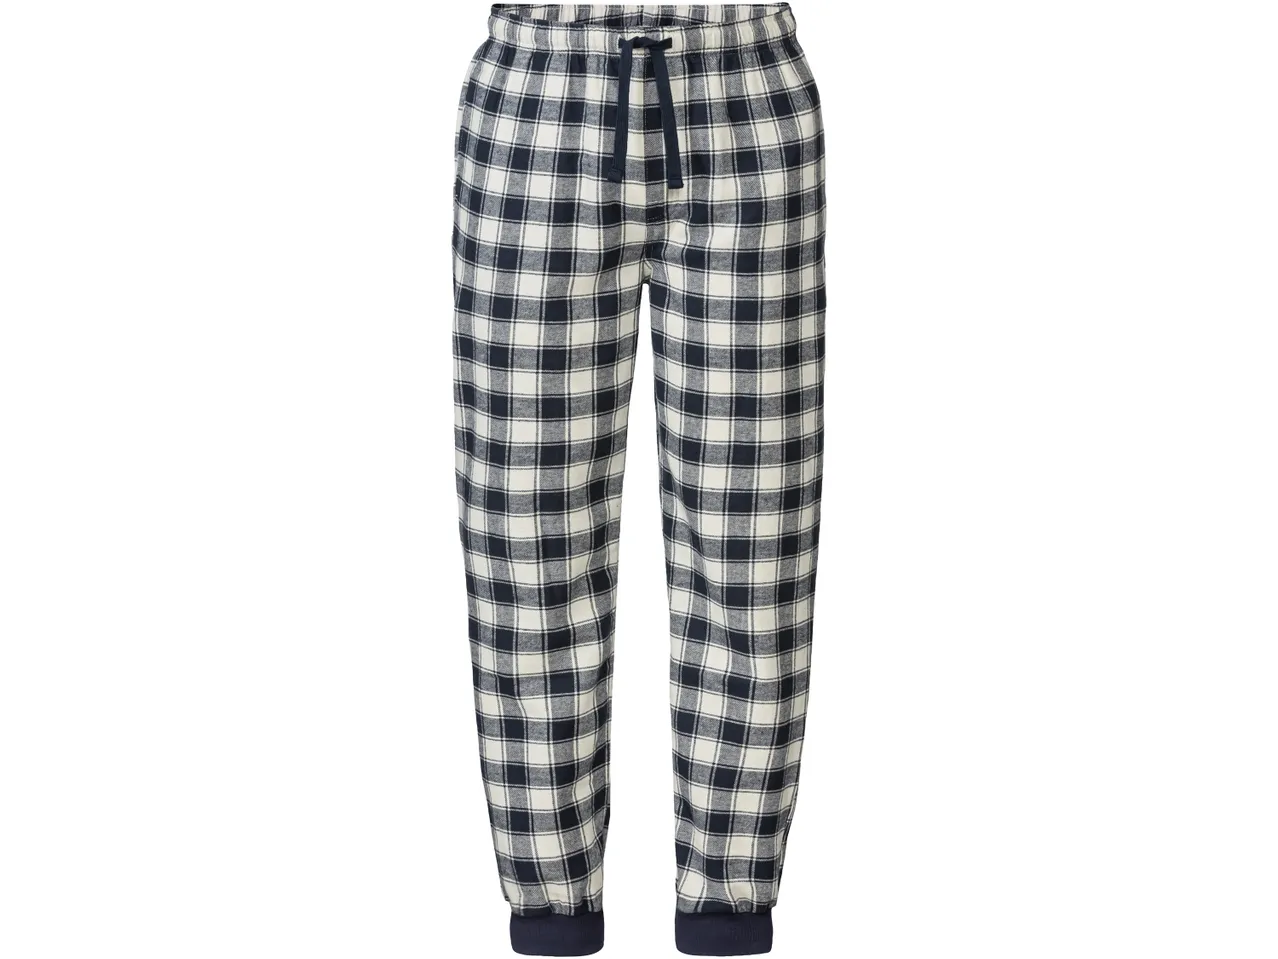 Pantaloni pigiama da uomo , prezzo 6,99 EUR 
Pantaloni pigiama da uomo Misure: S-XL ...